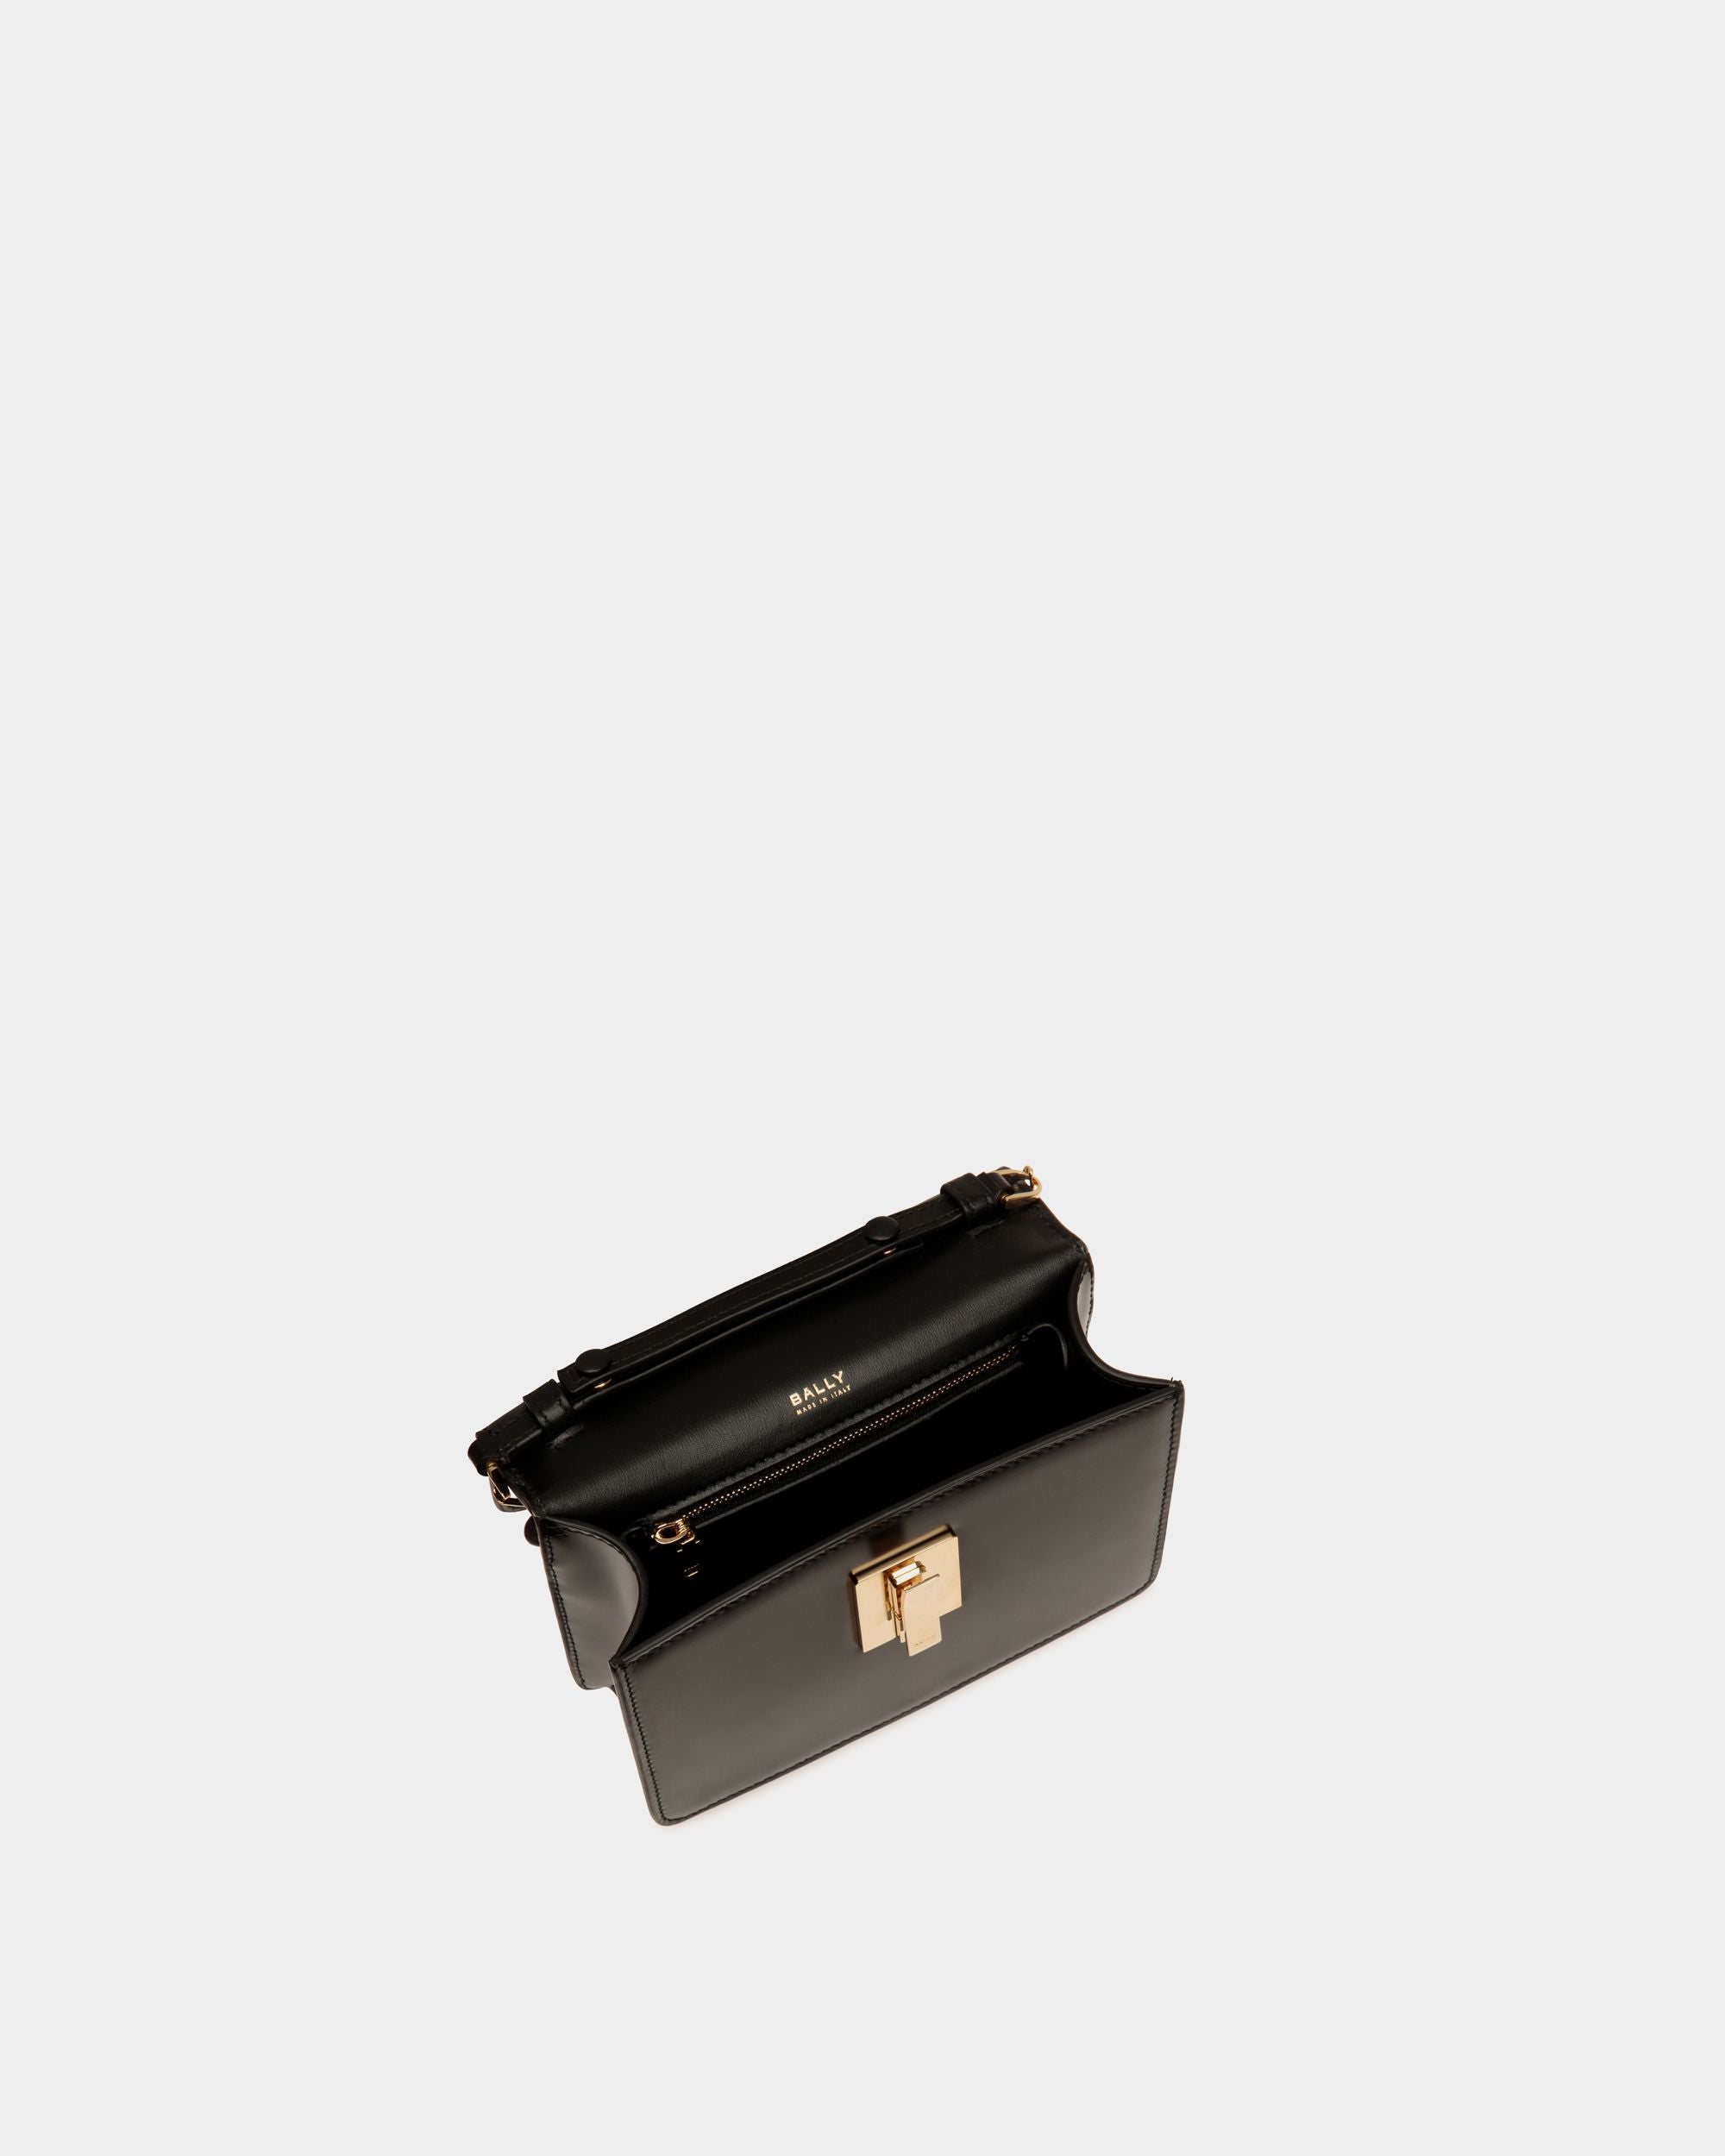 Ollam Mini Top Handle Bag in Black Brushed Leather